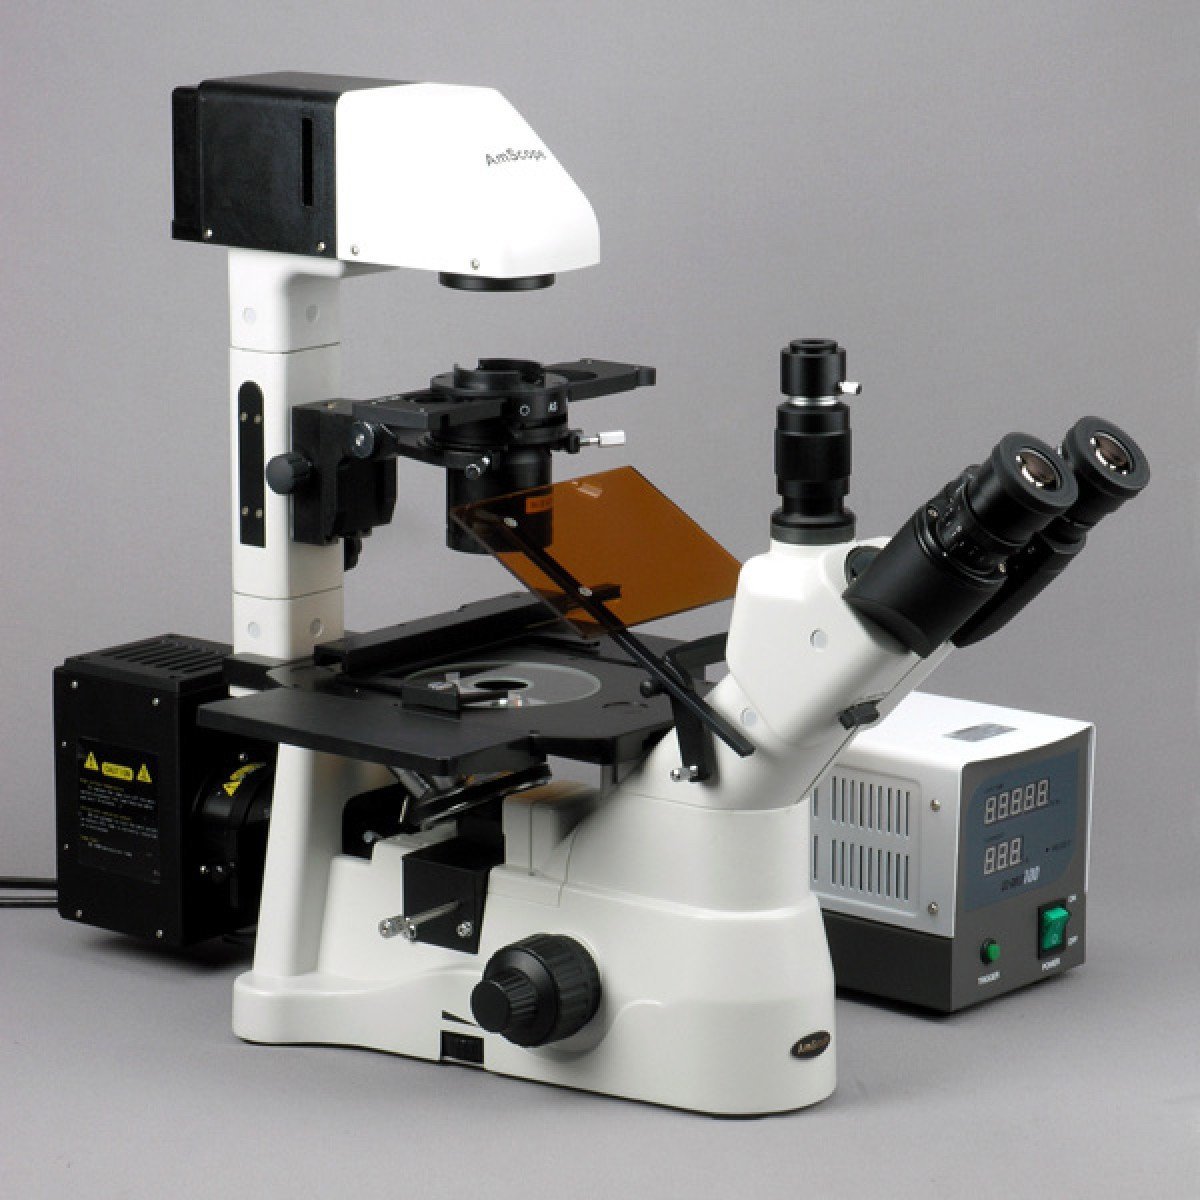 AmScope 40X-900X Phase Contrast Fluorescence Inverted Microscope - IN480TA-FL